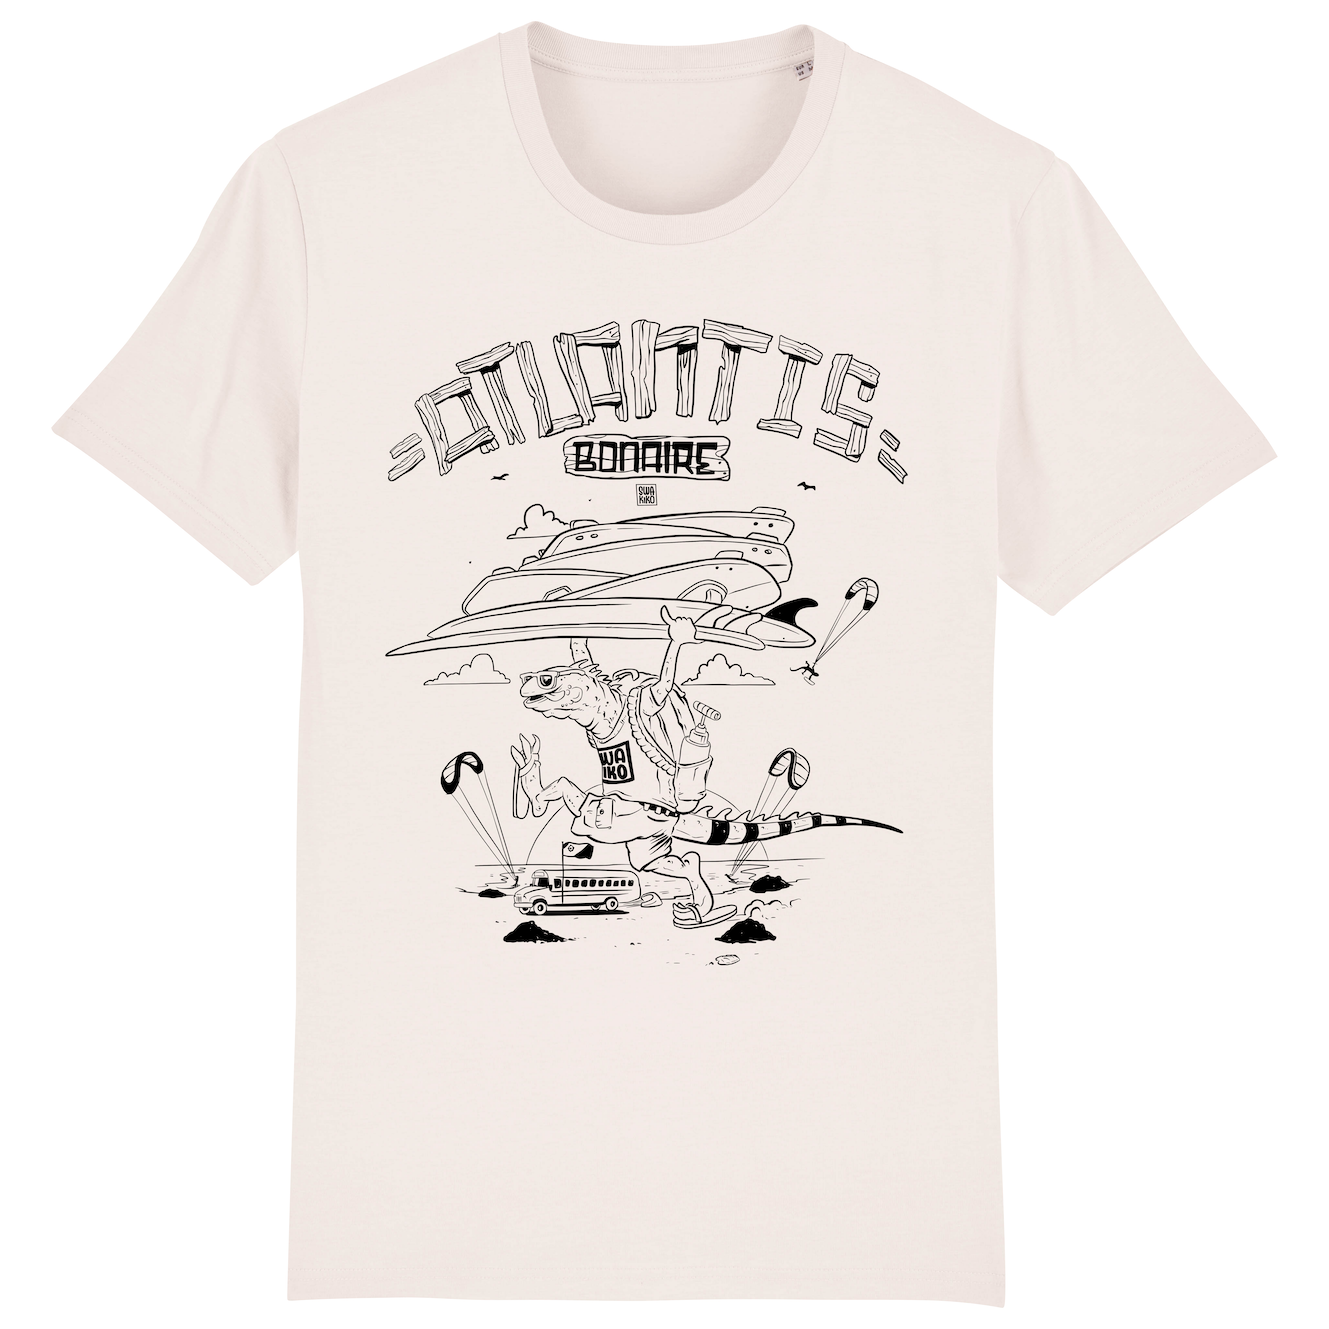 Kitesurf T-shirt Bonaire vinage white men